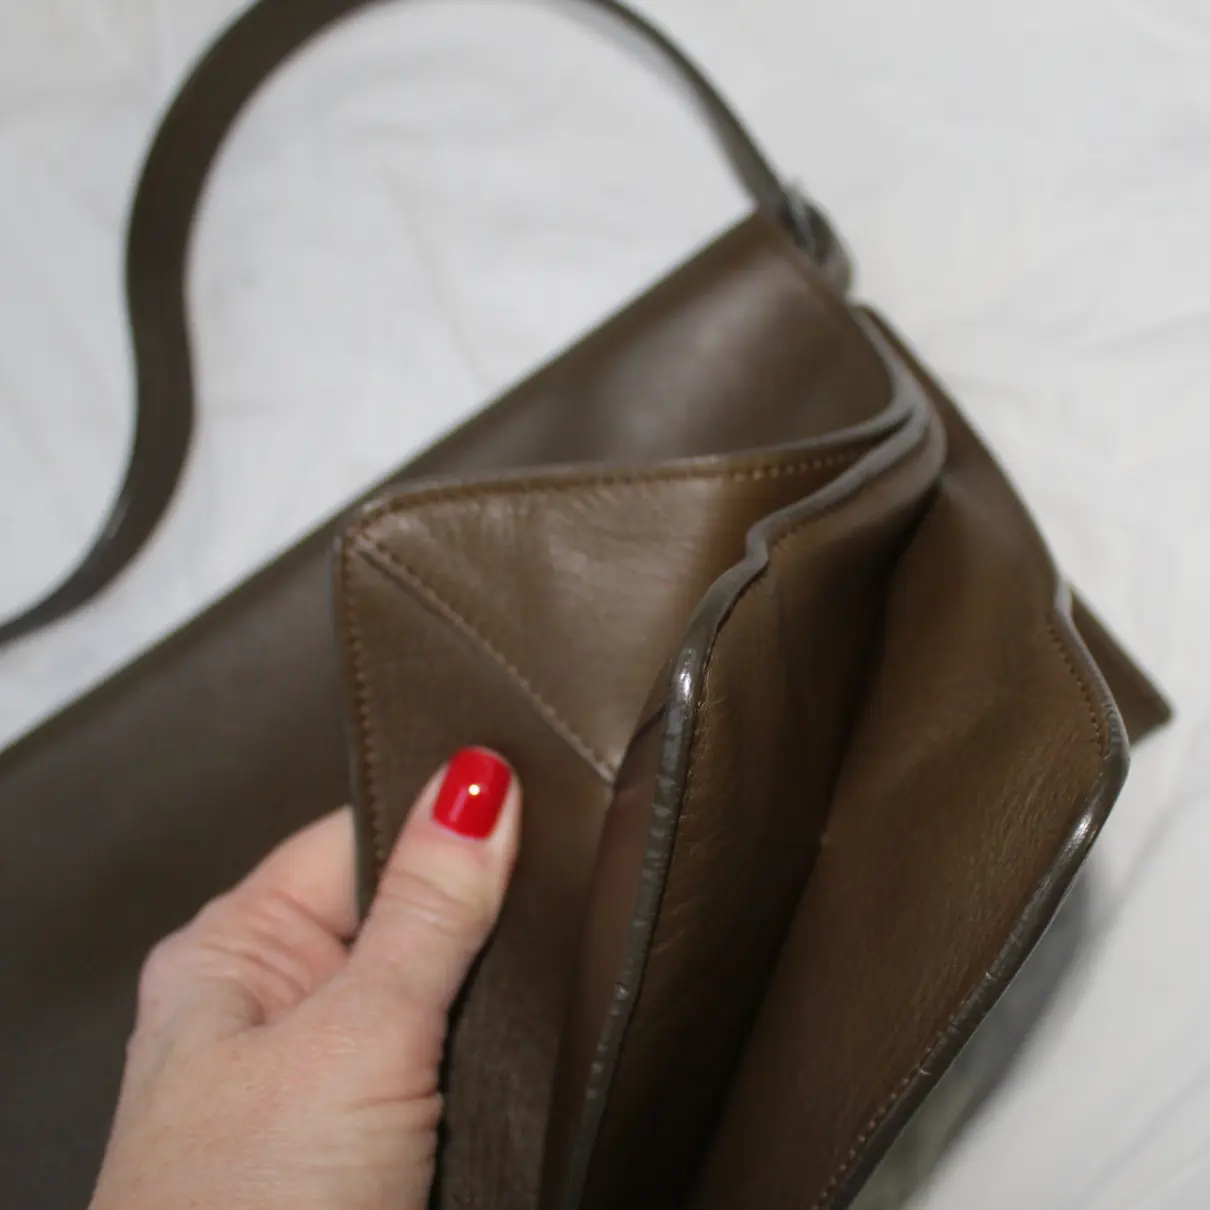 Blade leather handbag Celine